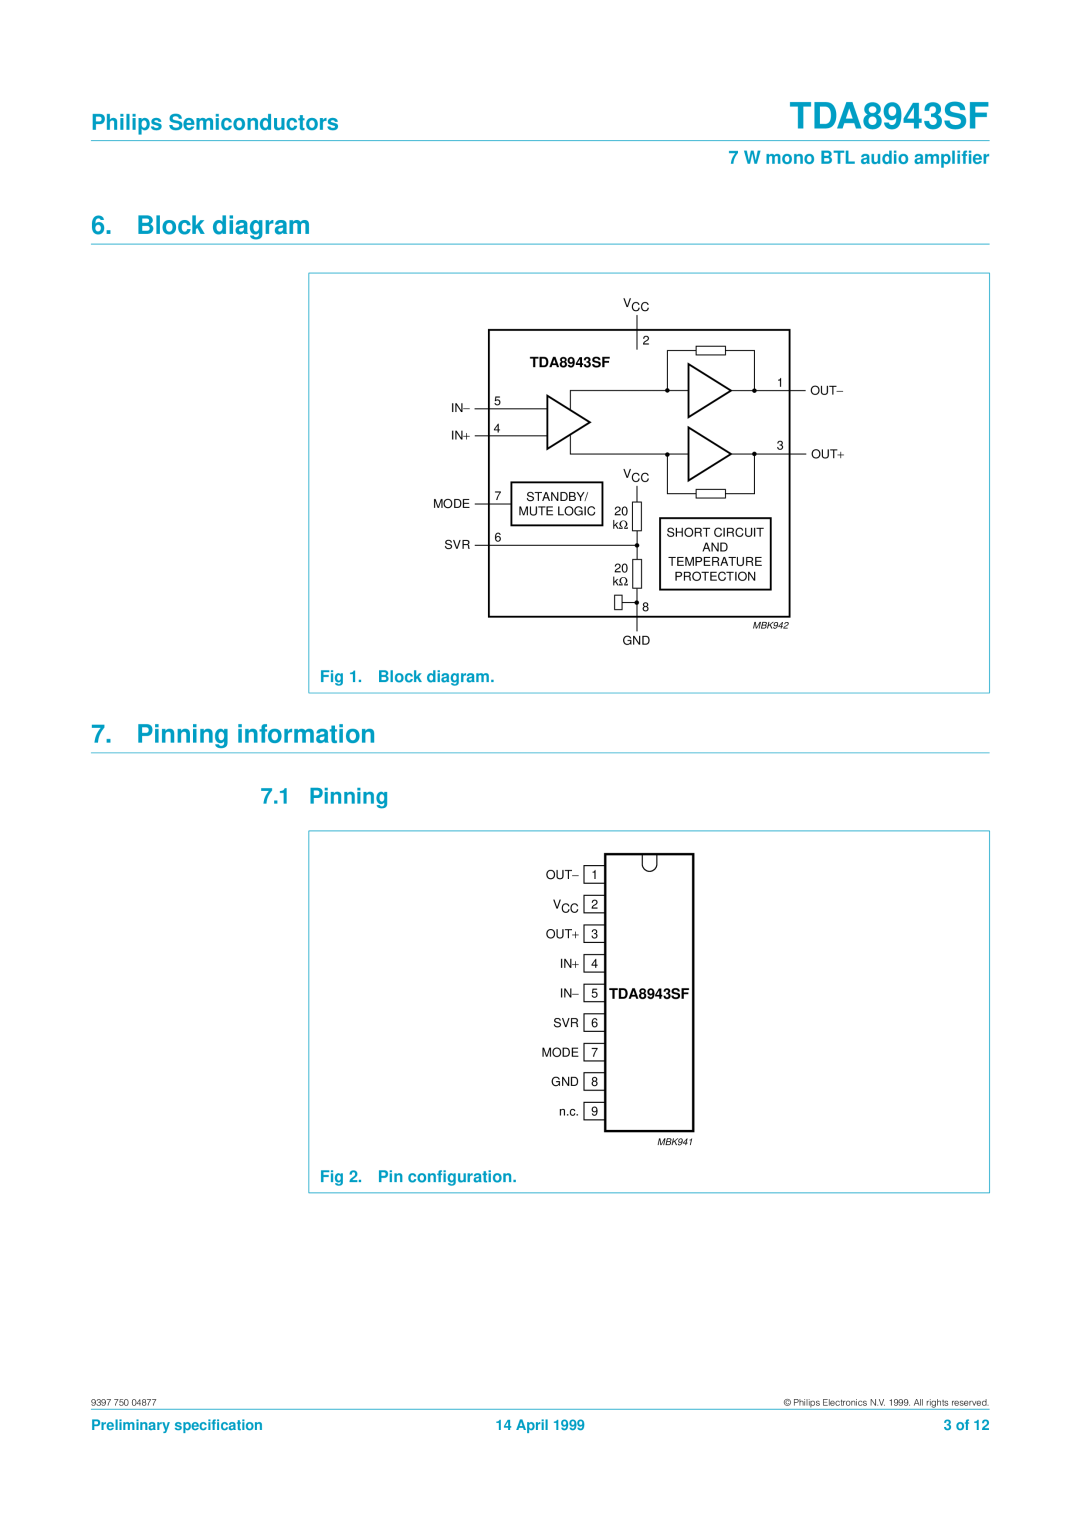 Philips TDA8943SF Block diagram, Pinning information, 7.1Pinning, Philips Semiconductors, W mono BTL audio ampliﬁer, April 